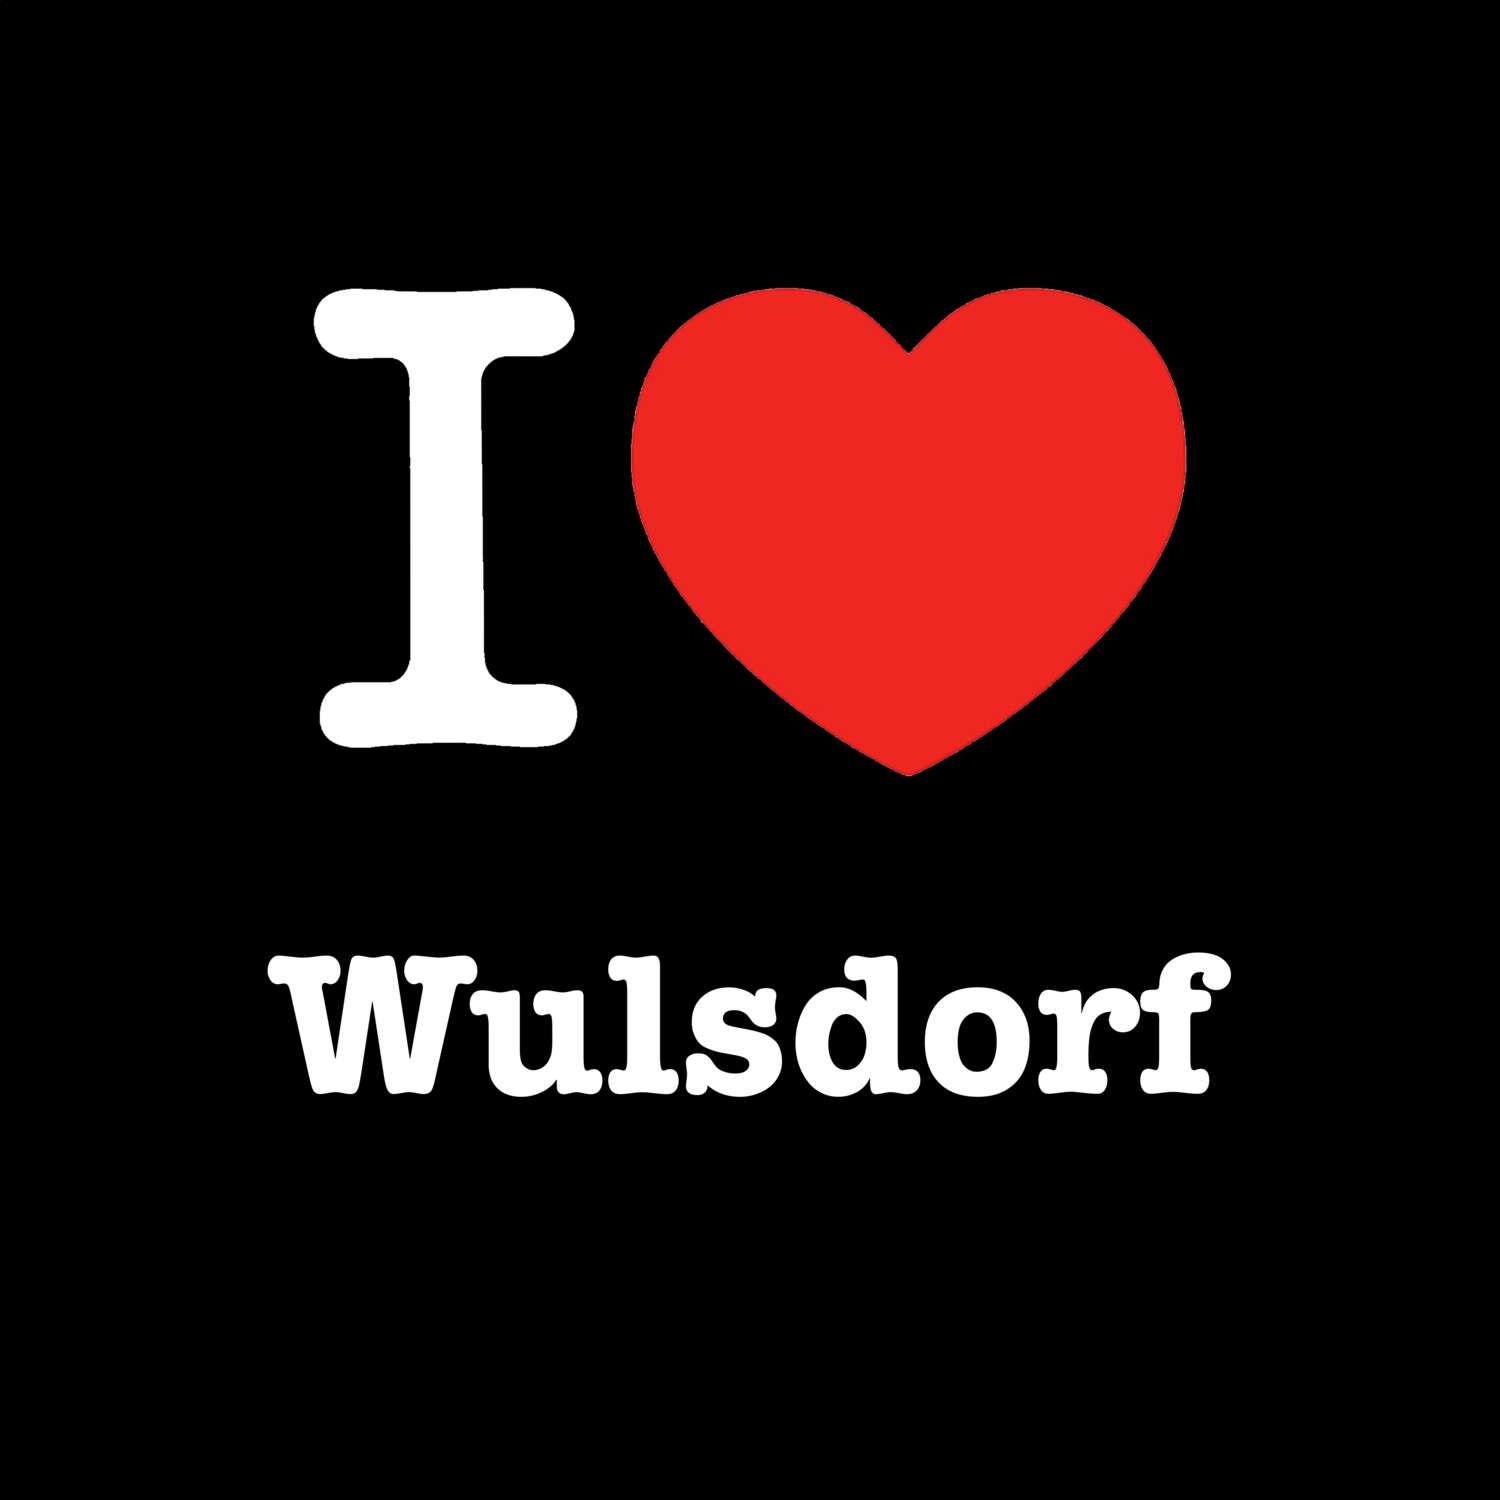 Wulsdorf T-Shirt »I love«